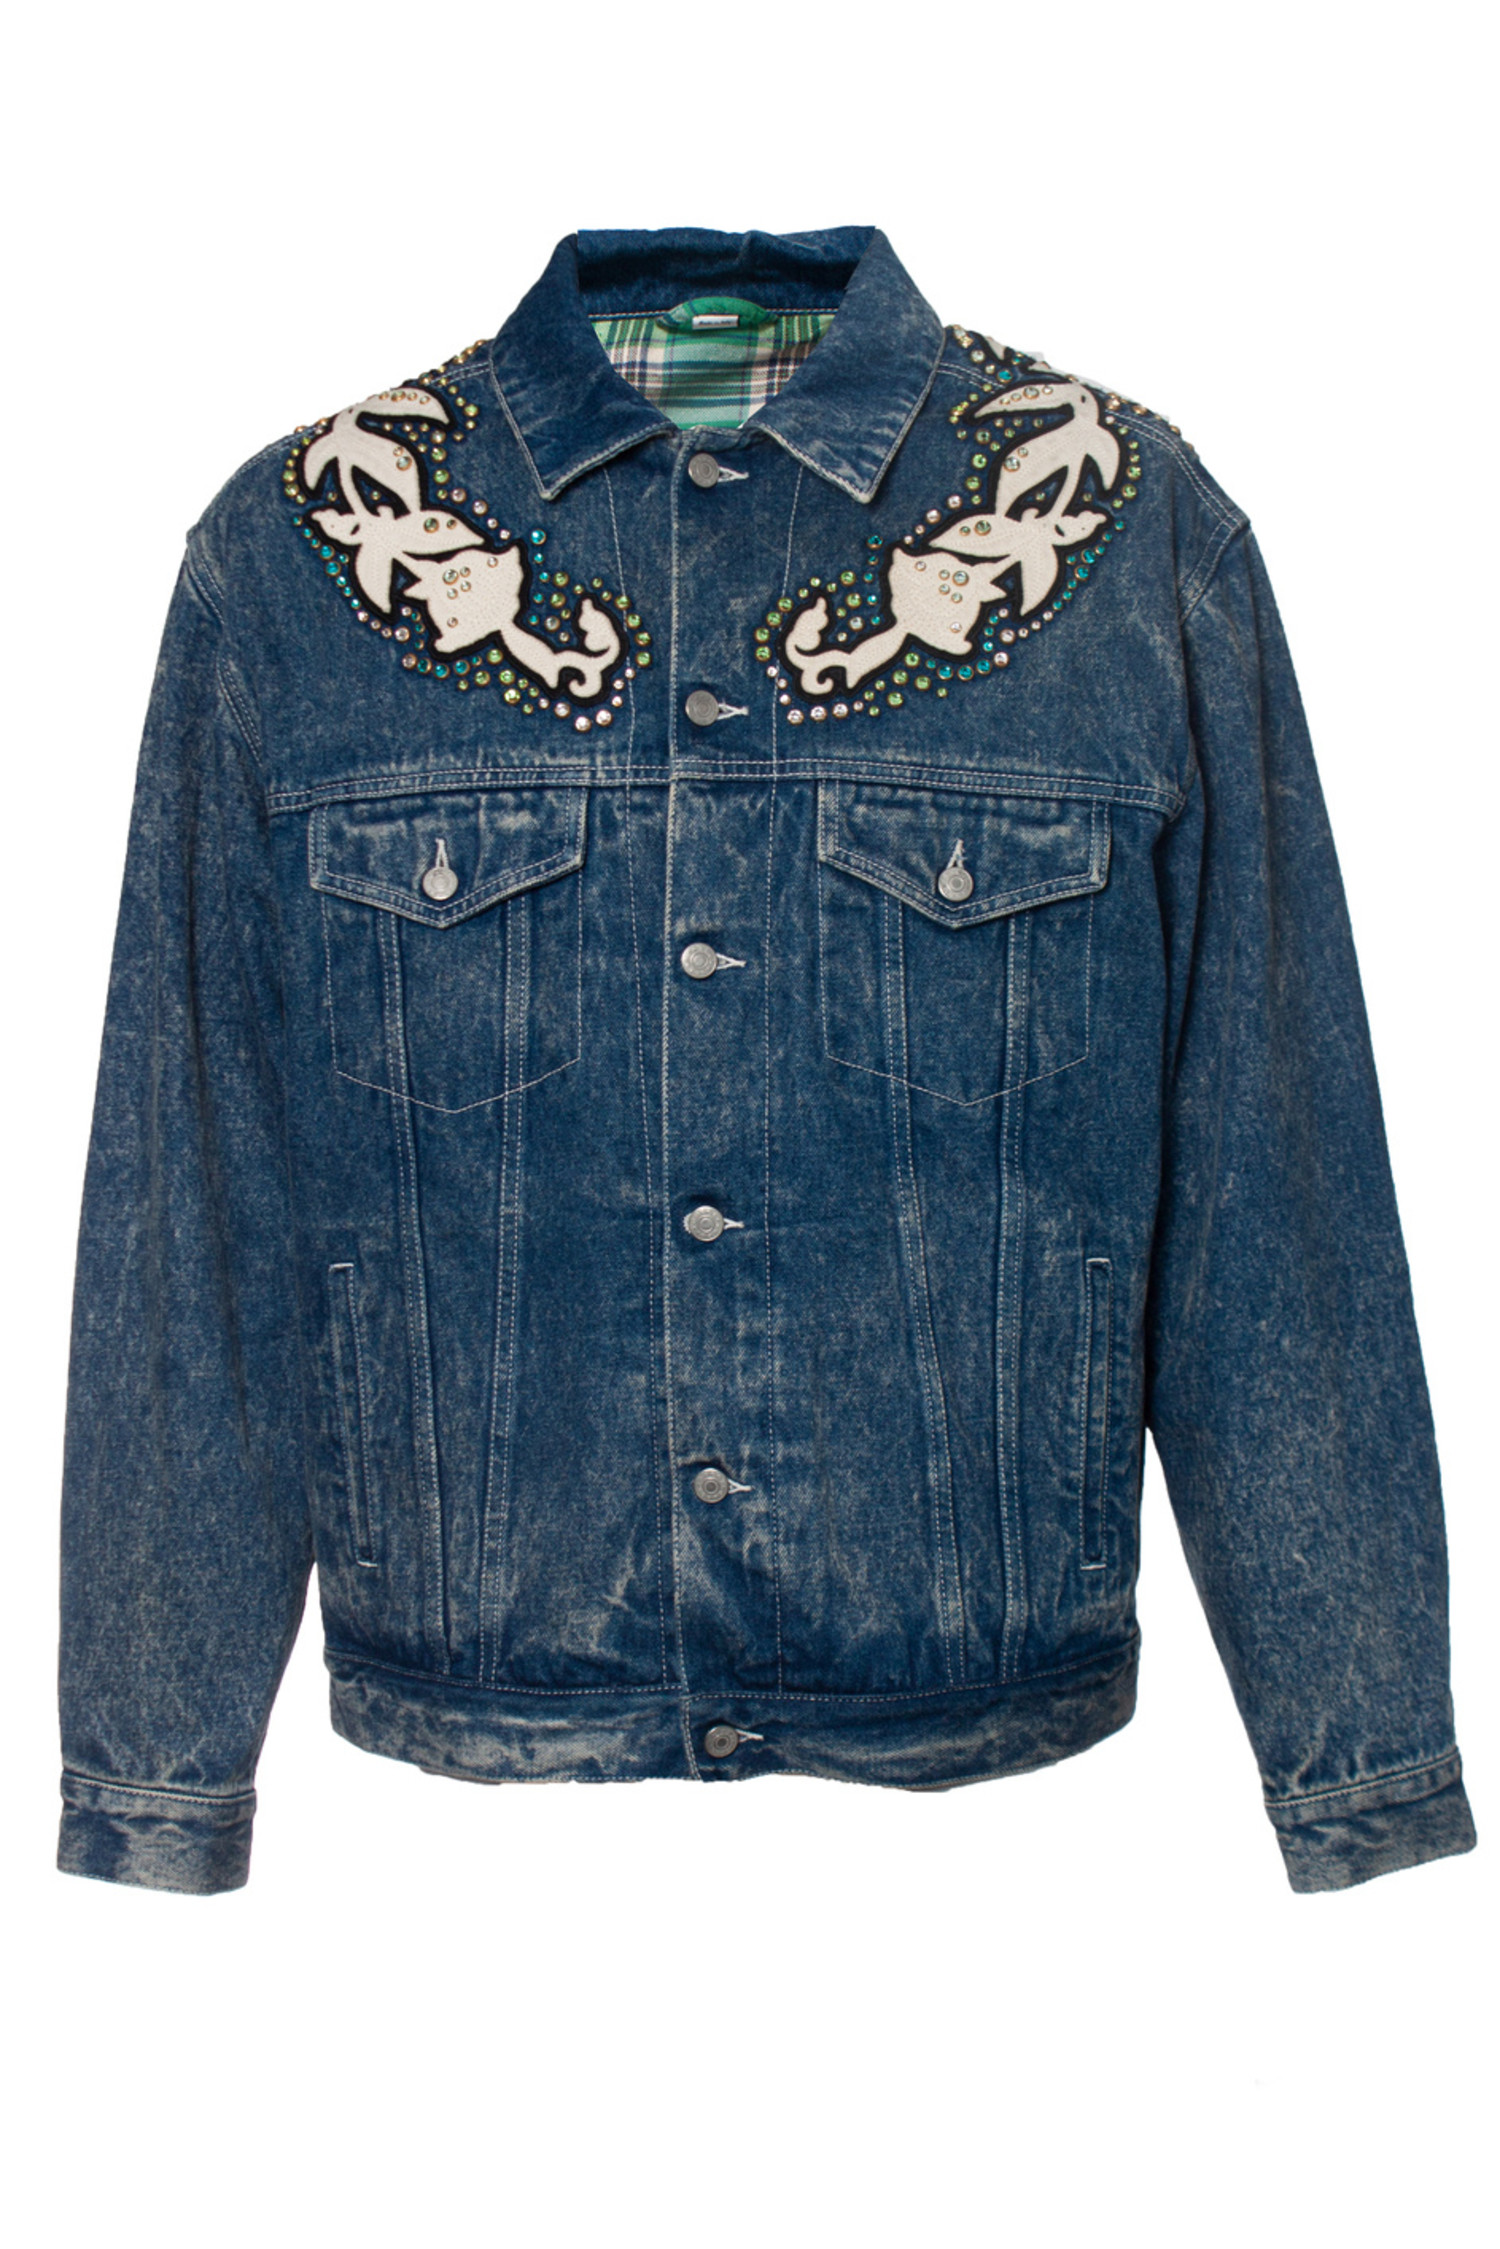 Gucci Oversize denim jacket with patches | Denim jacket fashion,  Embroidered denim jacket, Leather jacket men style